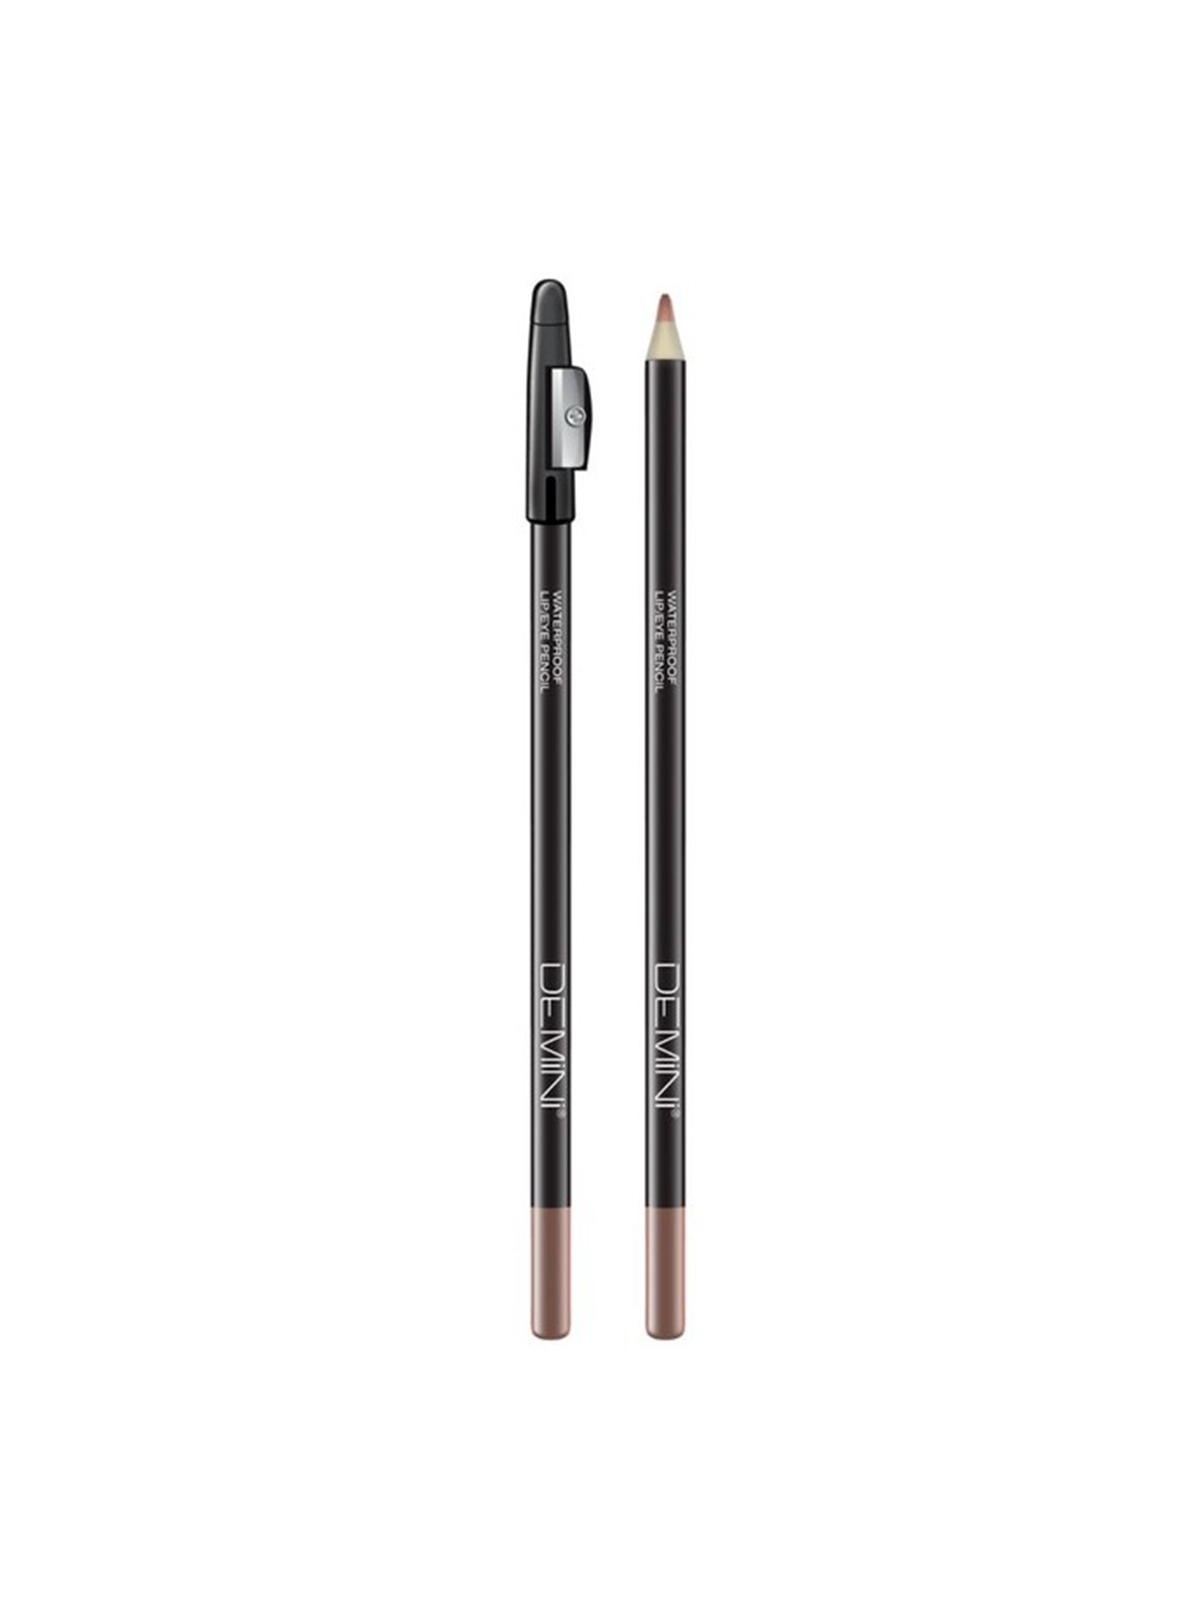 DeMiNi Карандаш косметический для губ/глаз водостойкий  - Waterproof Lip/Eye Pencil № 039  1,8 г